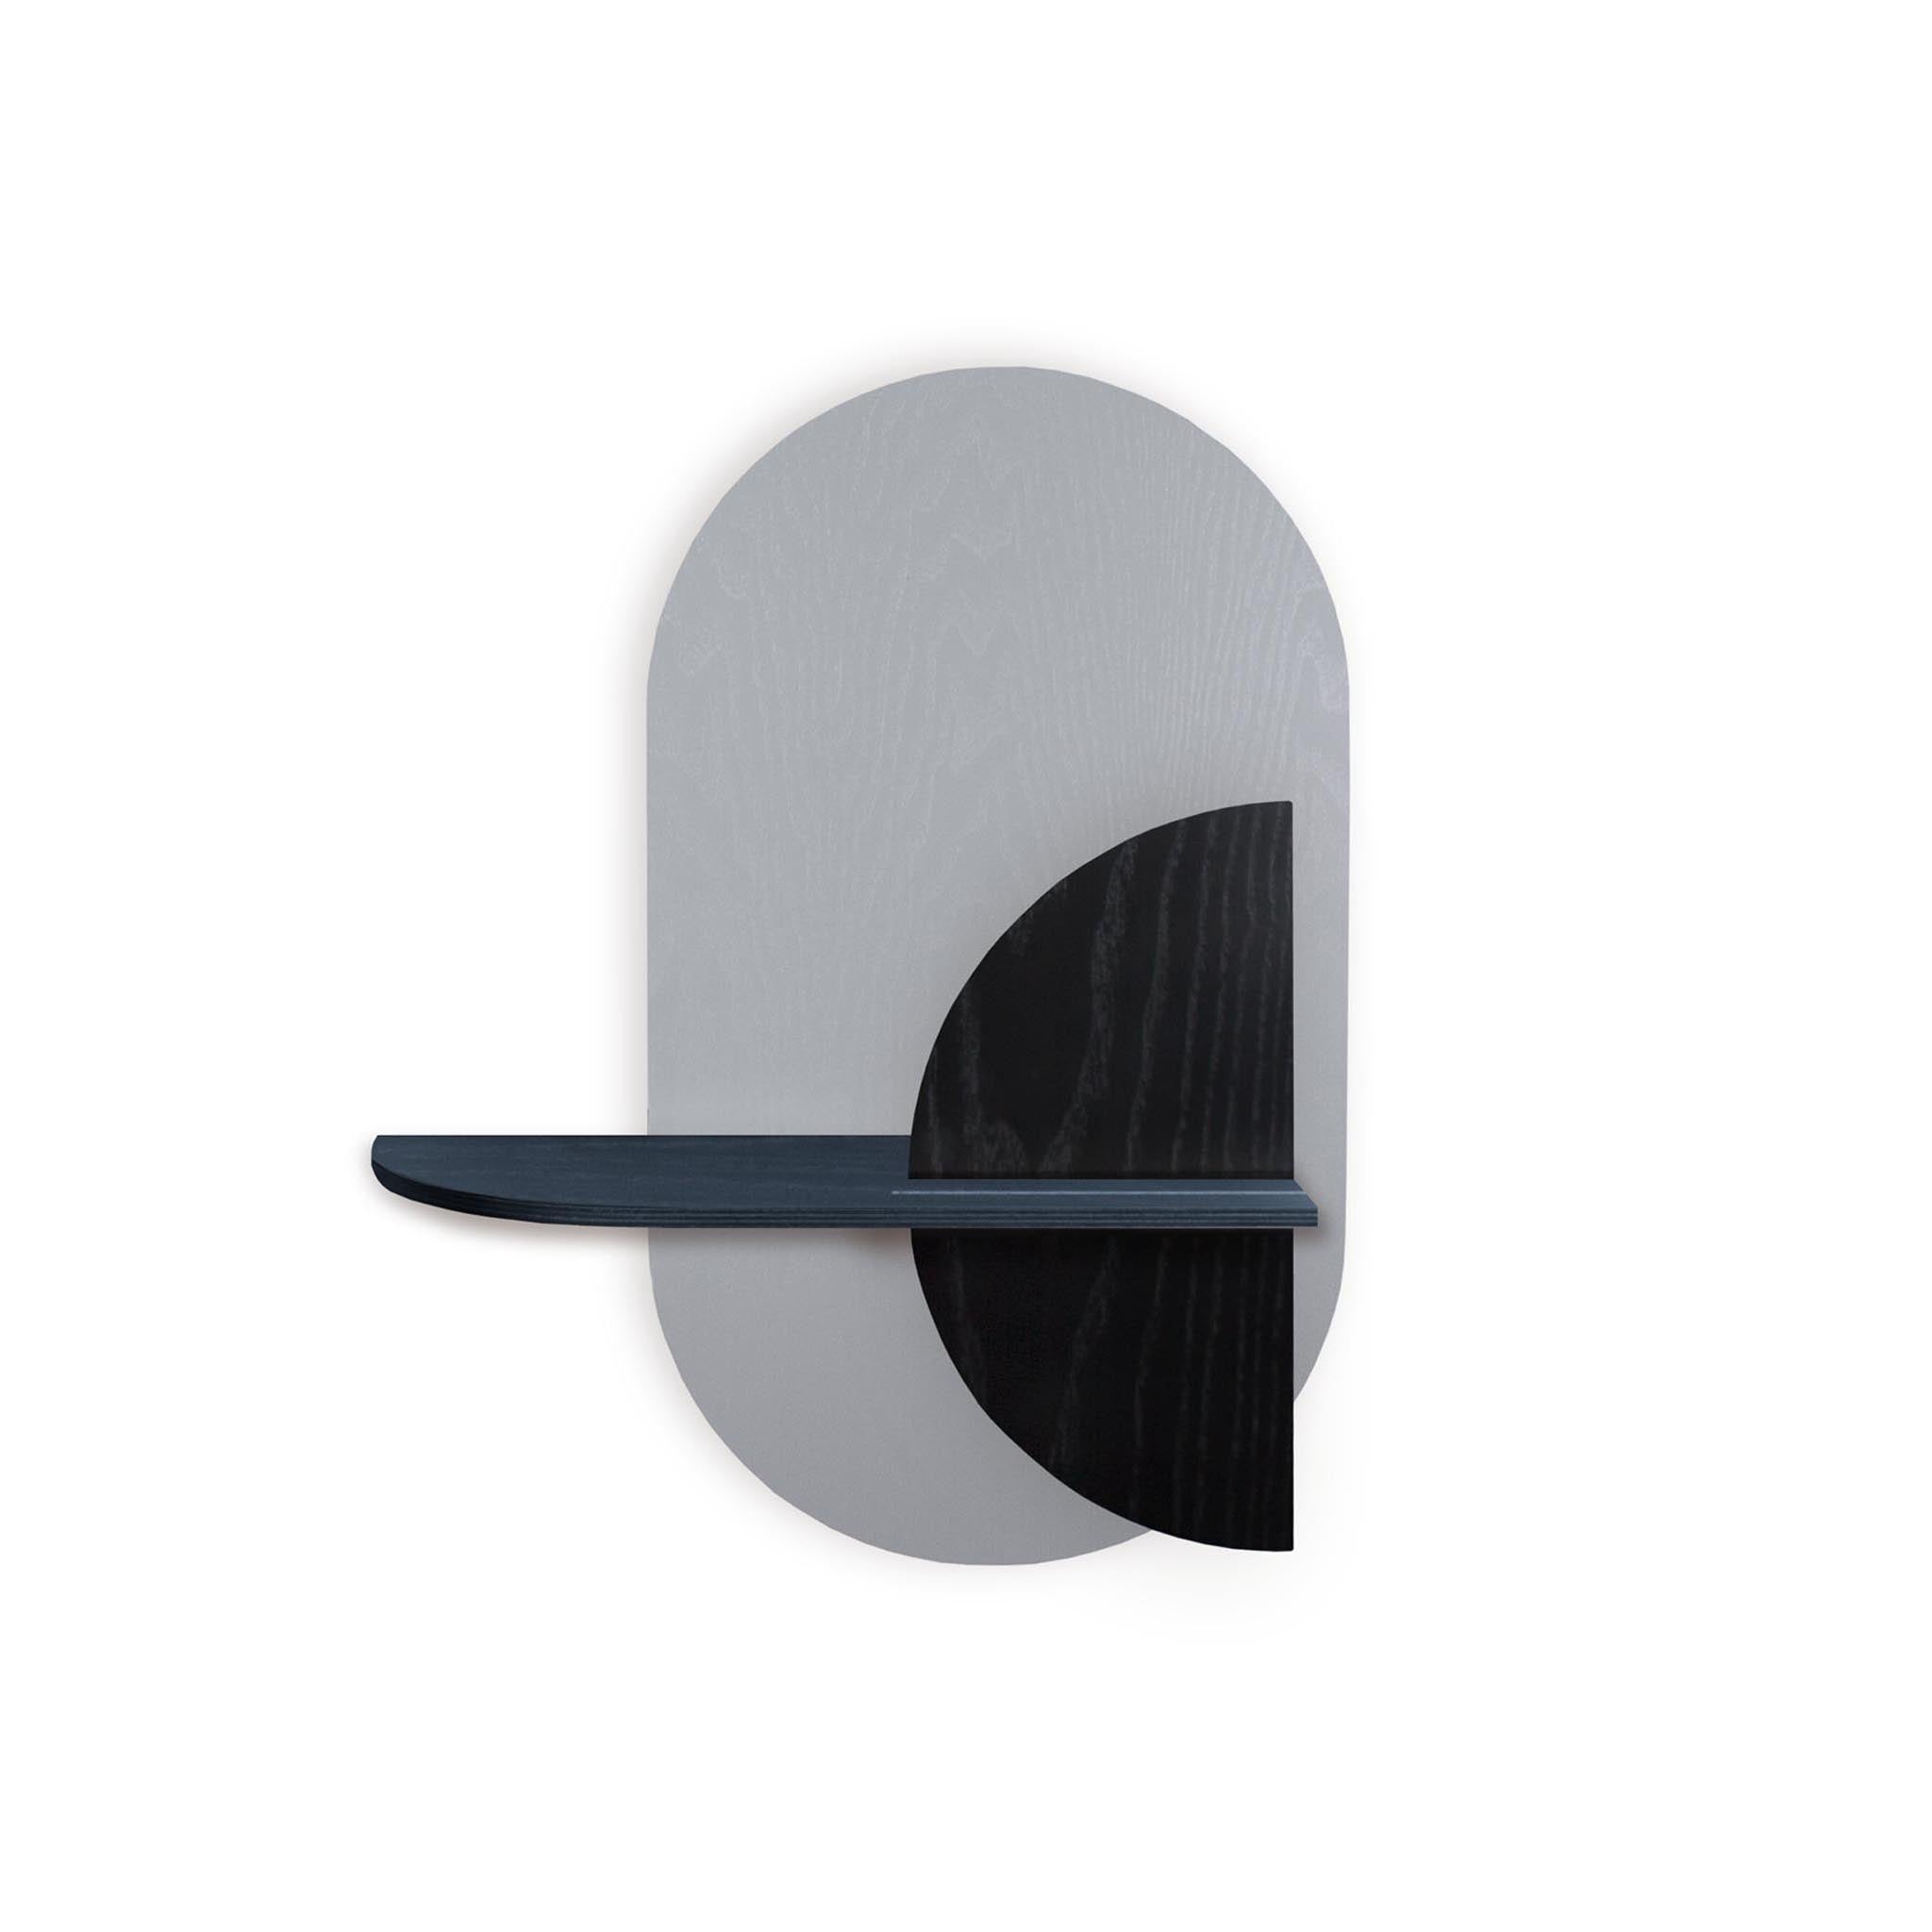 Alba wall shelf · Grey oval